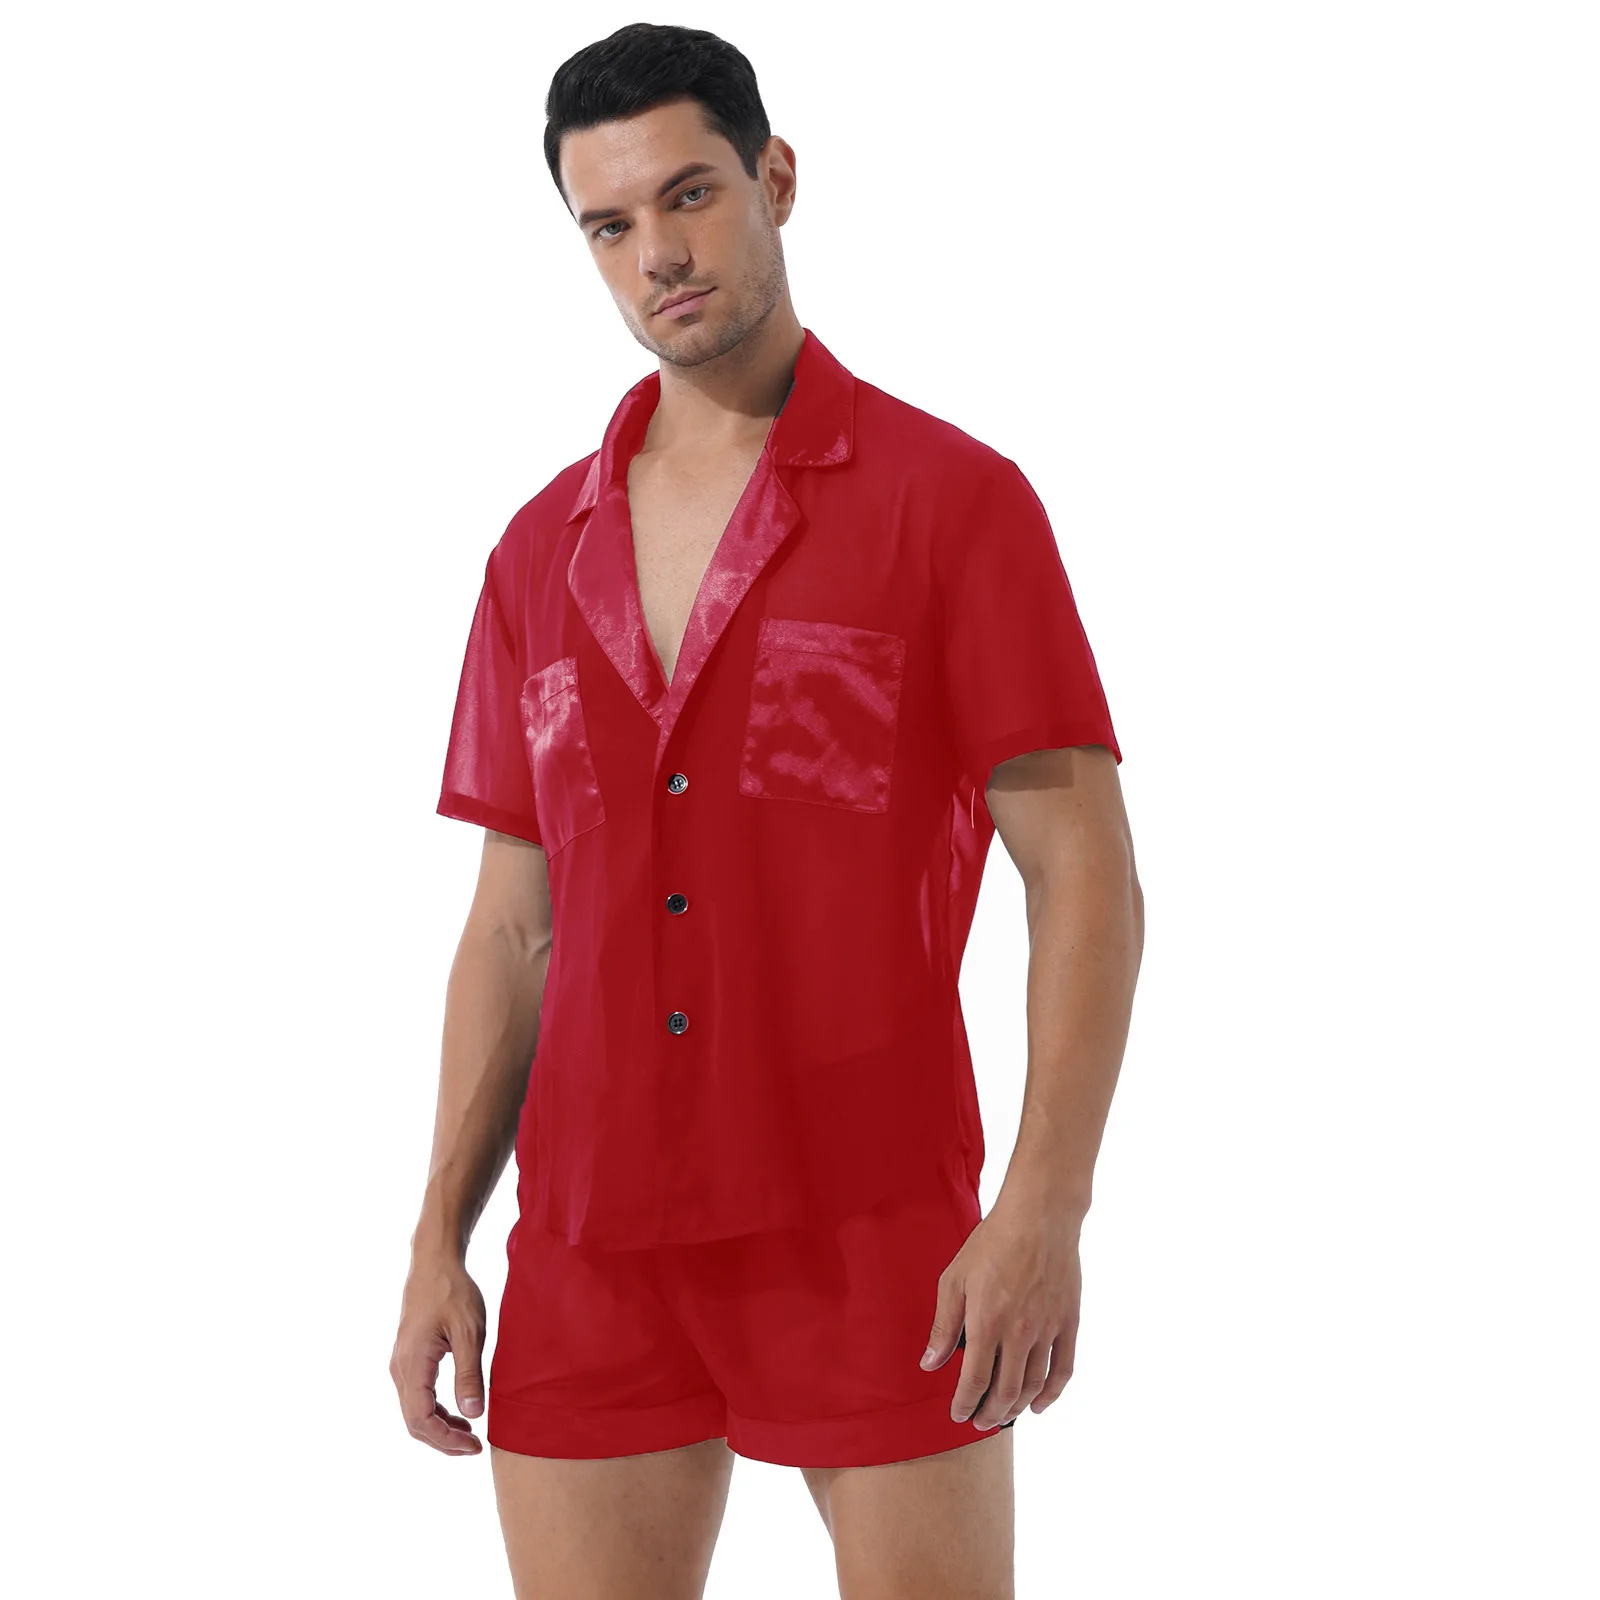 Mens Male Pajama Set See-through Sissy Nightwear Sleepwear Satin Patchwork Chiffon Lapel Short Sleeve Button Tops with Shorts mens pajama pants Men's Sleep & Lounge